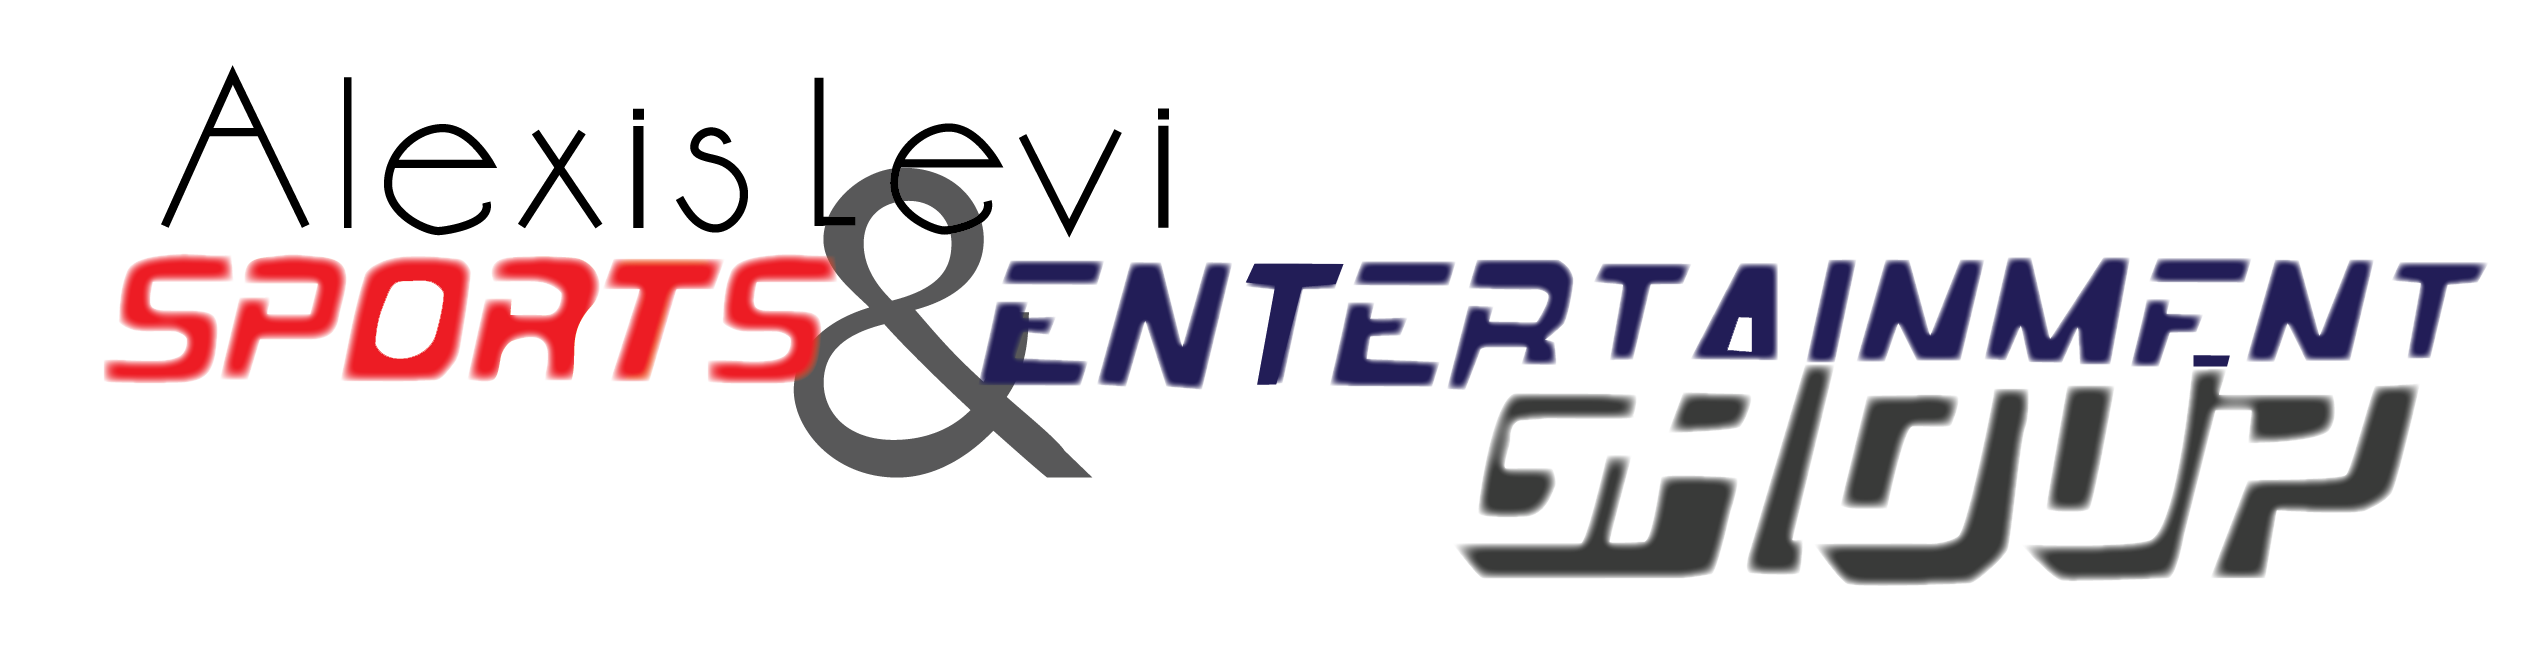 Alexis Levi Sports and Entertainment logo